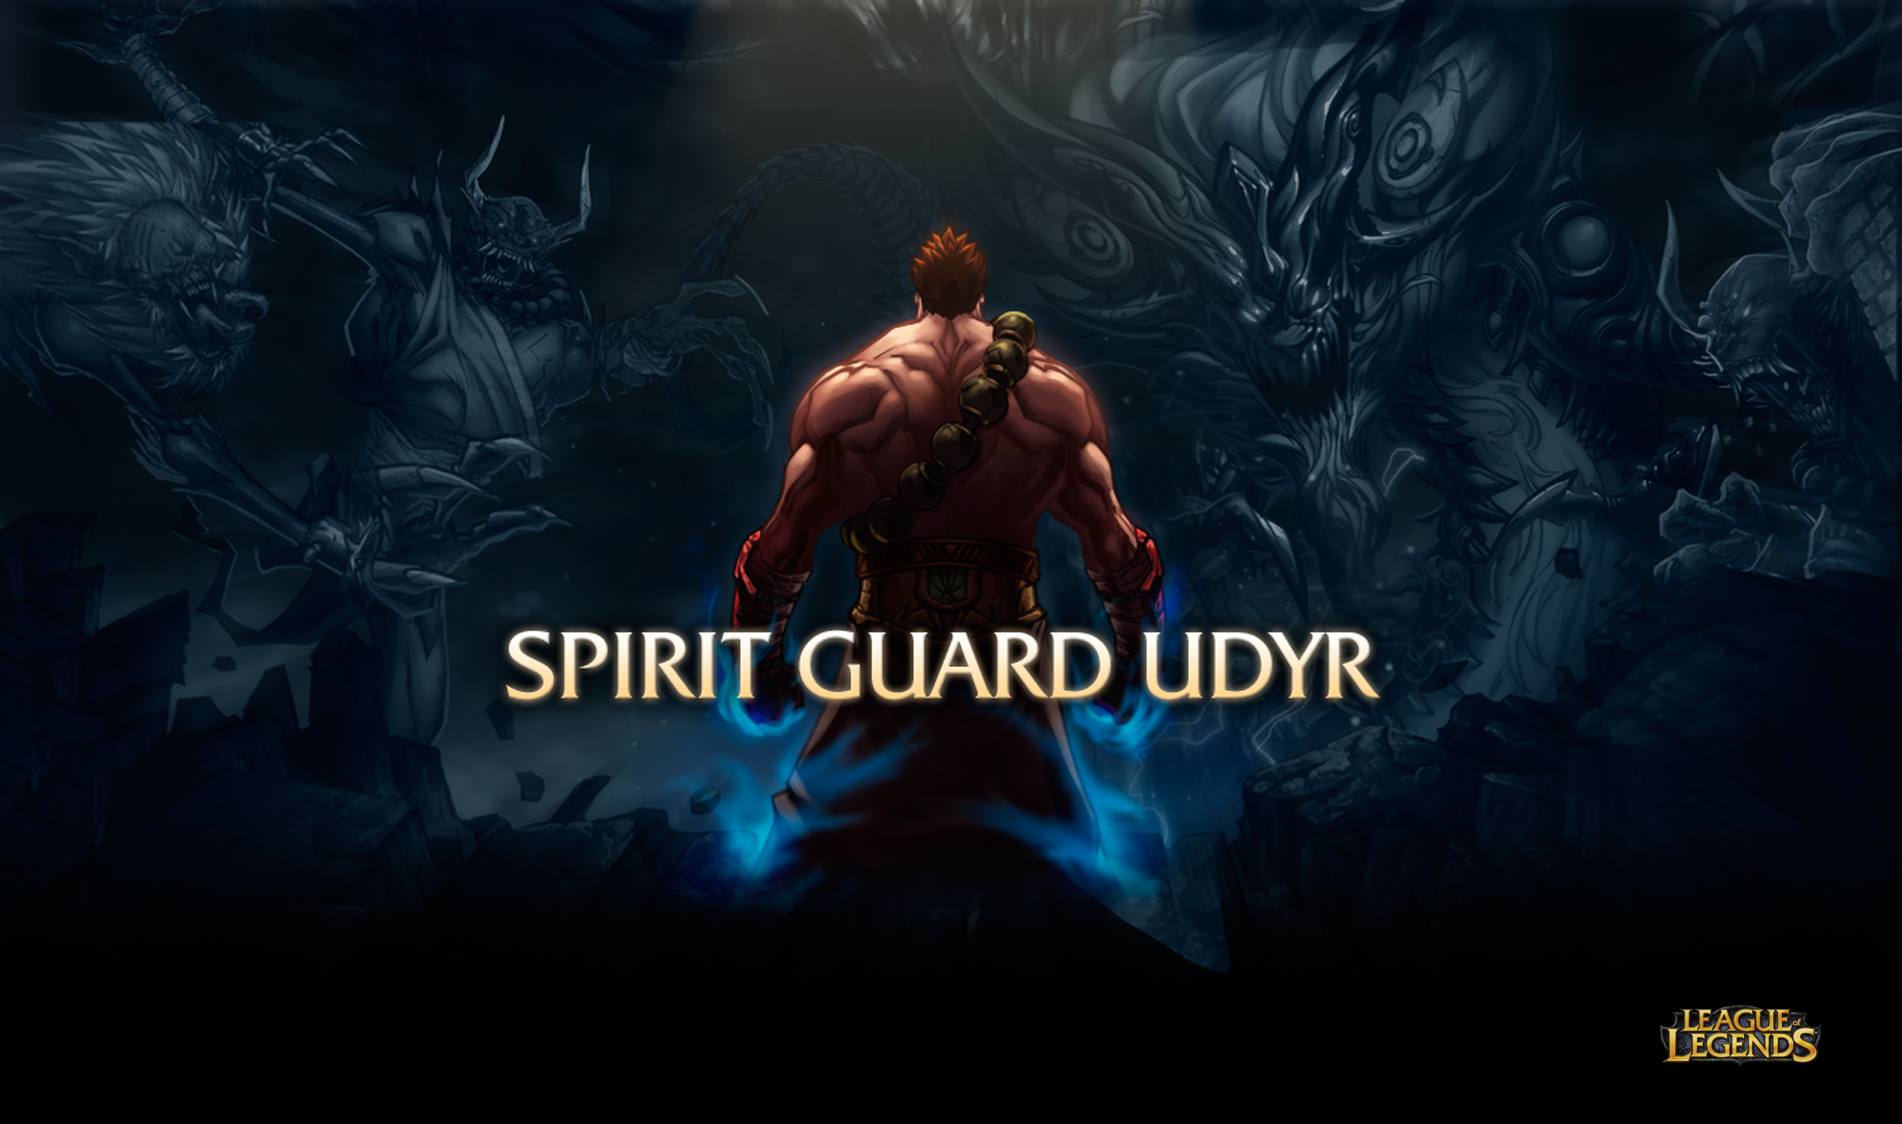 Udyr SpiritGuard Comic Cover 01.jpg